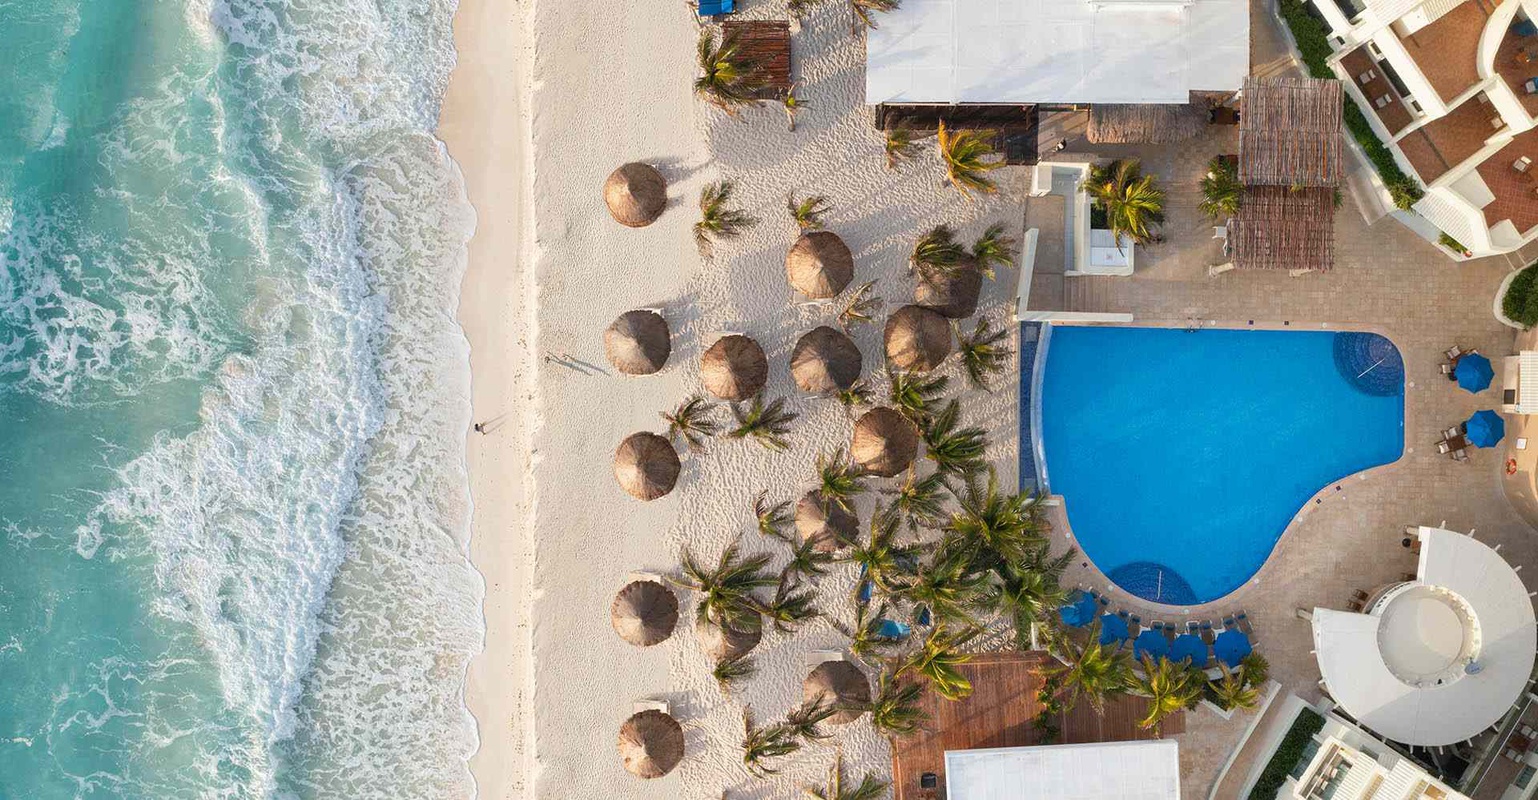 The hotel awakening in paradise NYX HOTEL CANCUN Cancun